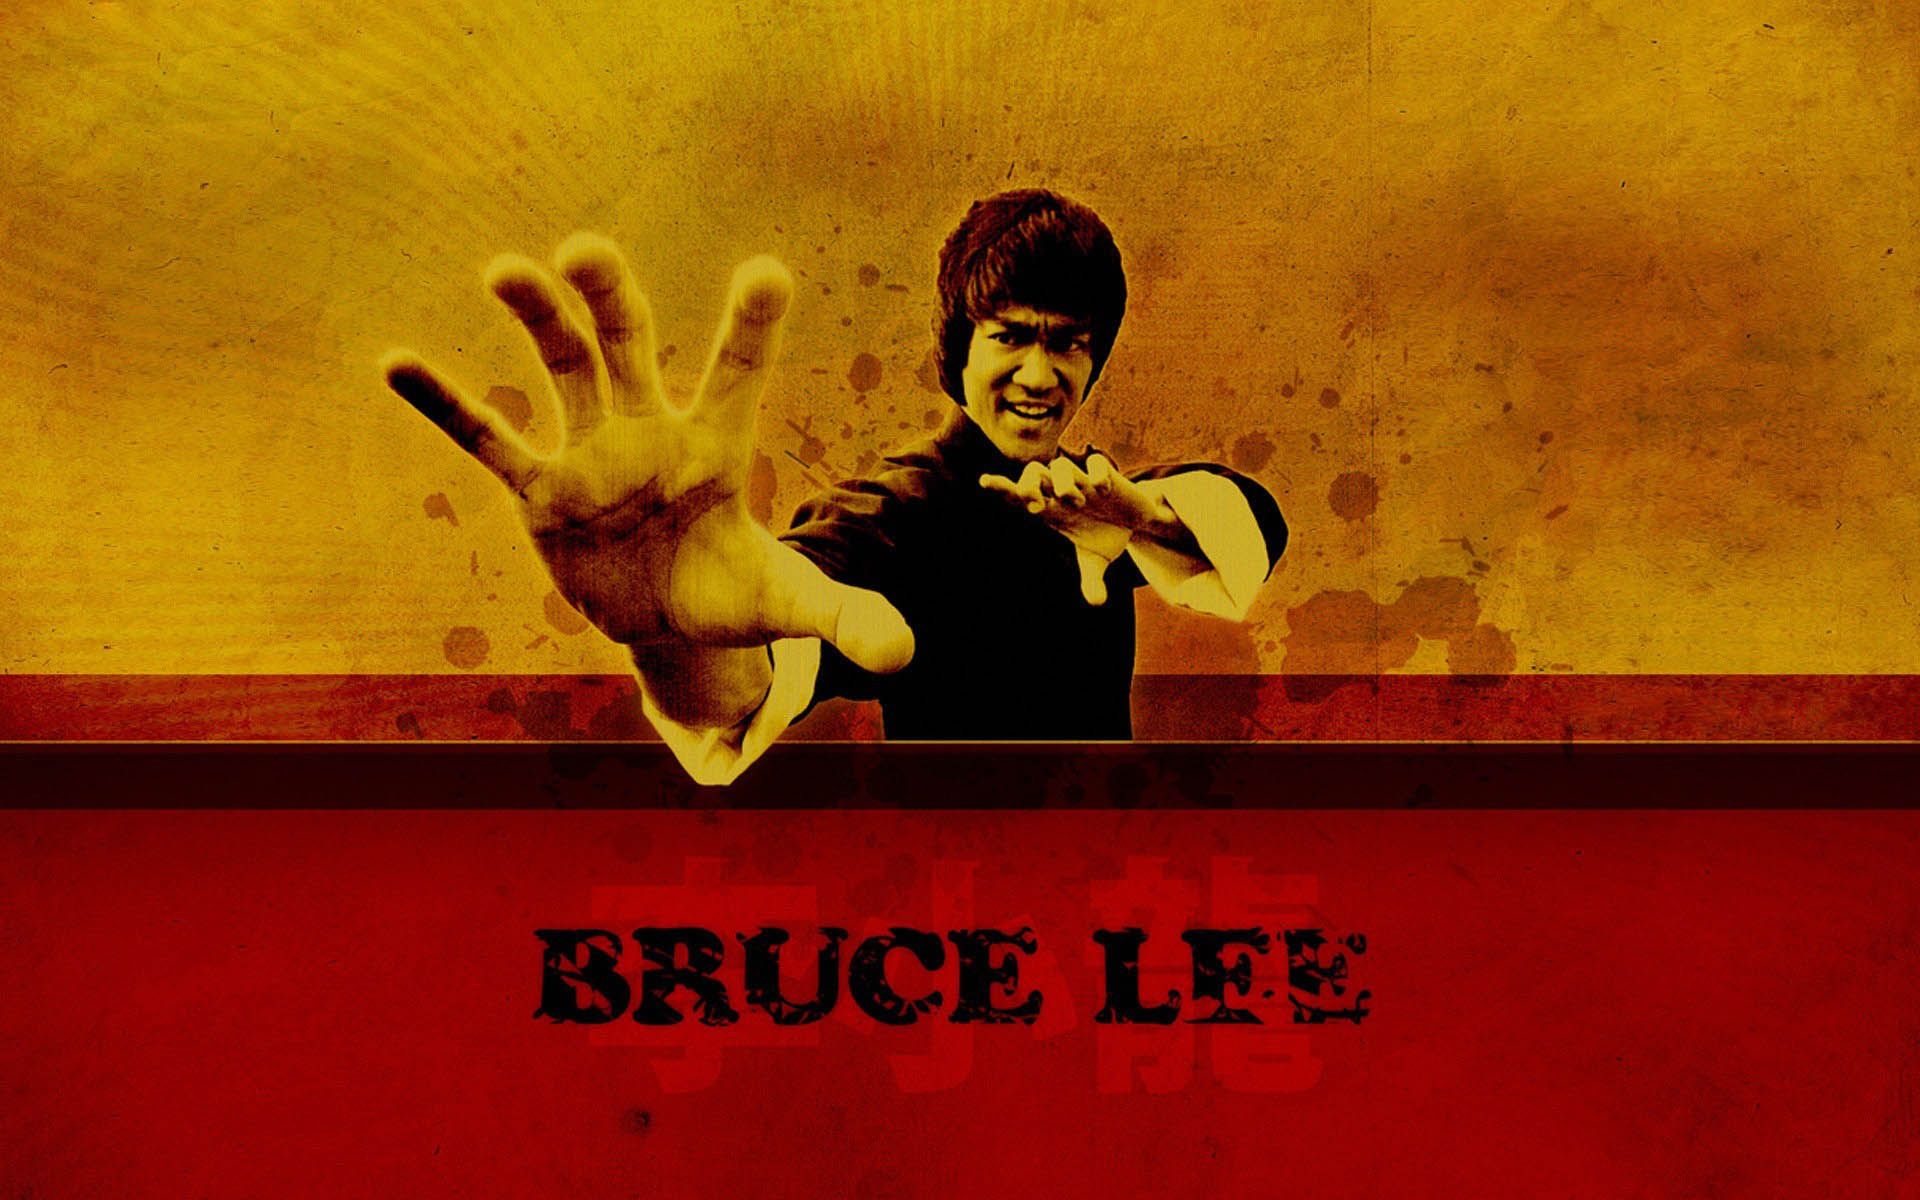 Bruce Lee wallpaper 1920x1200 Wallpapers, 1920x1200 Wallpapers